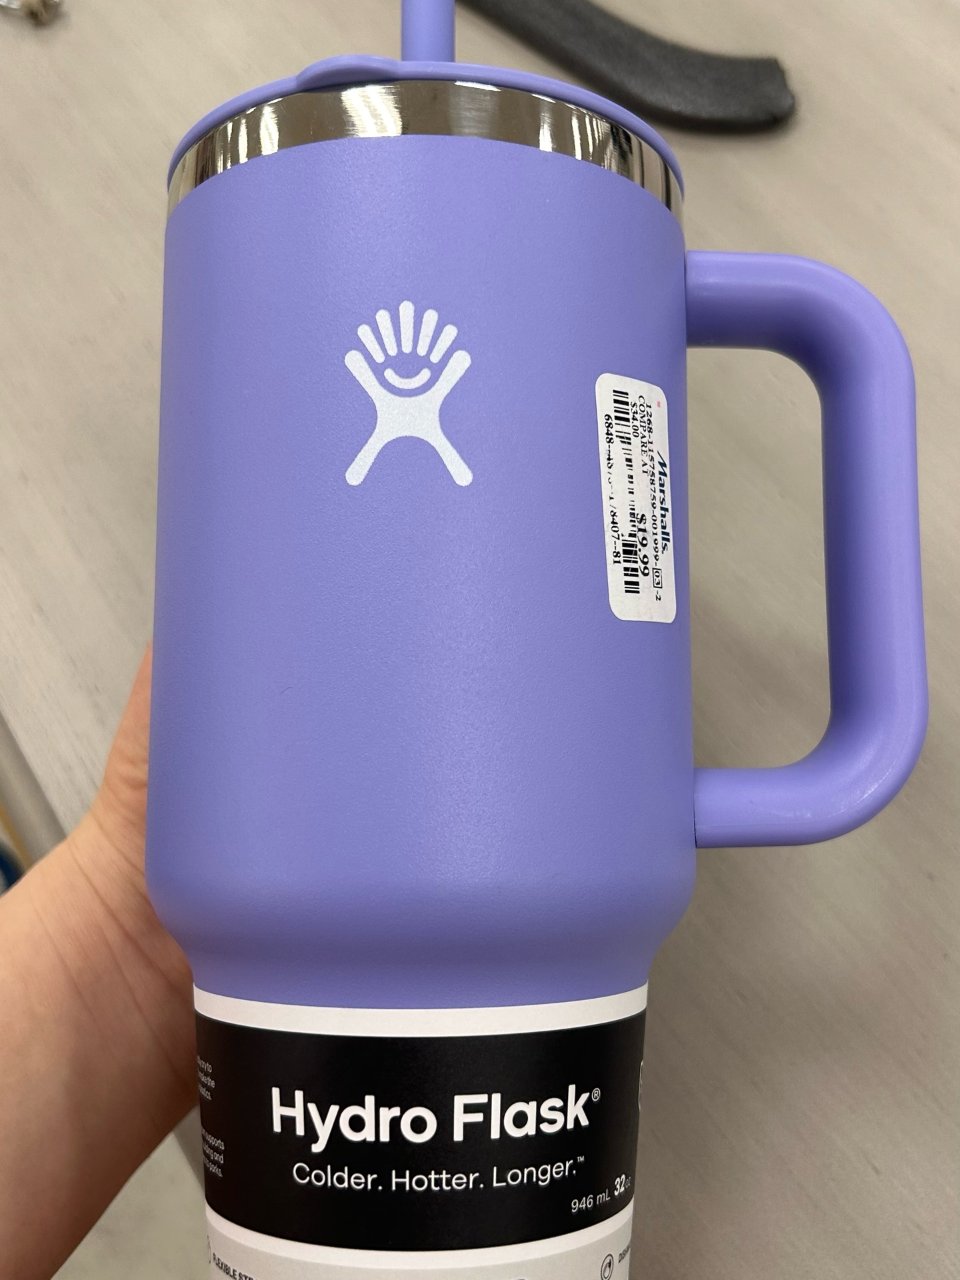 Hydro flask $20 